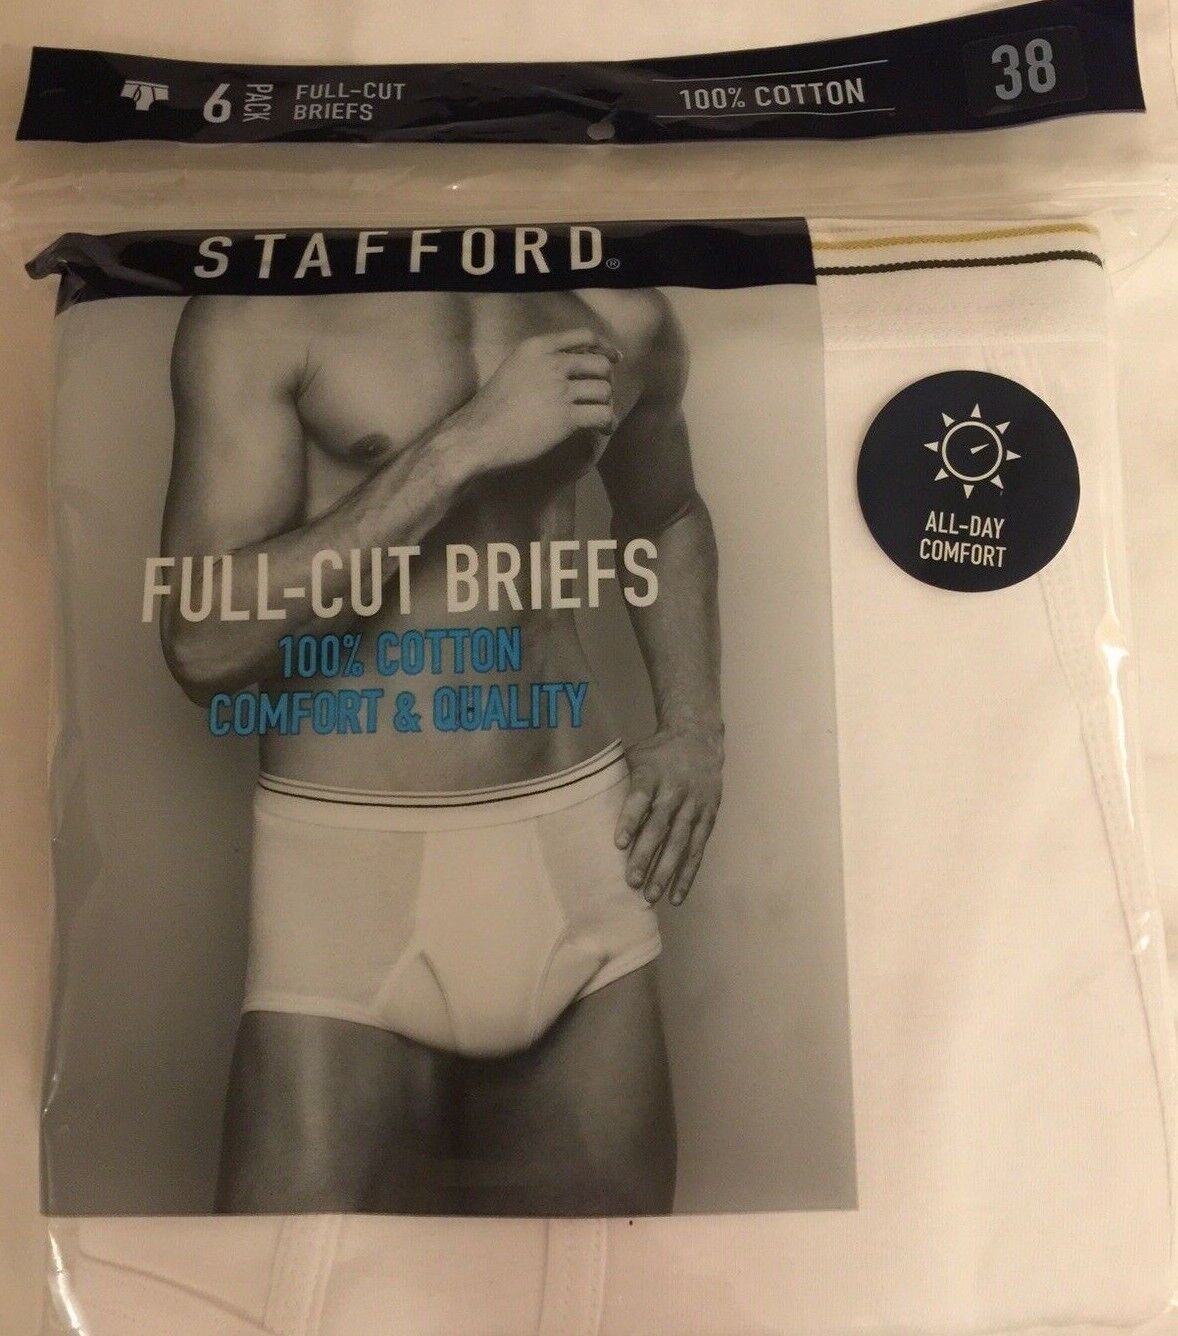 NWT - 6 Full Cut Brief 100% Cotton Stafford Men's Underwear White 38 All Day